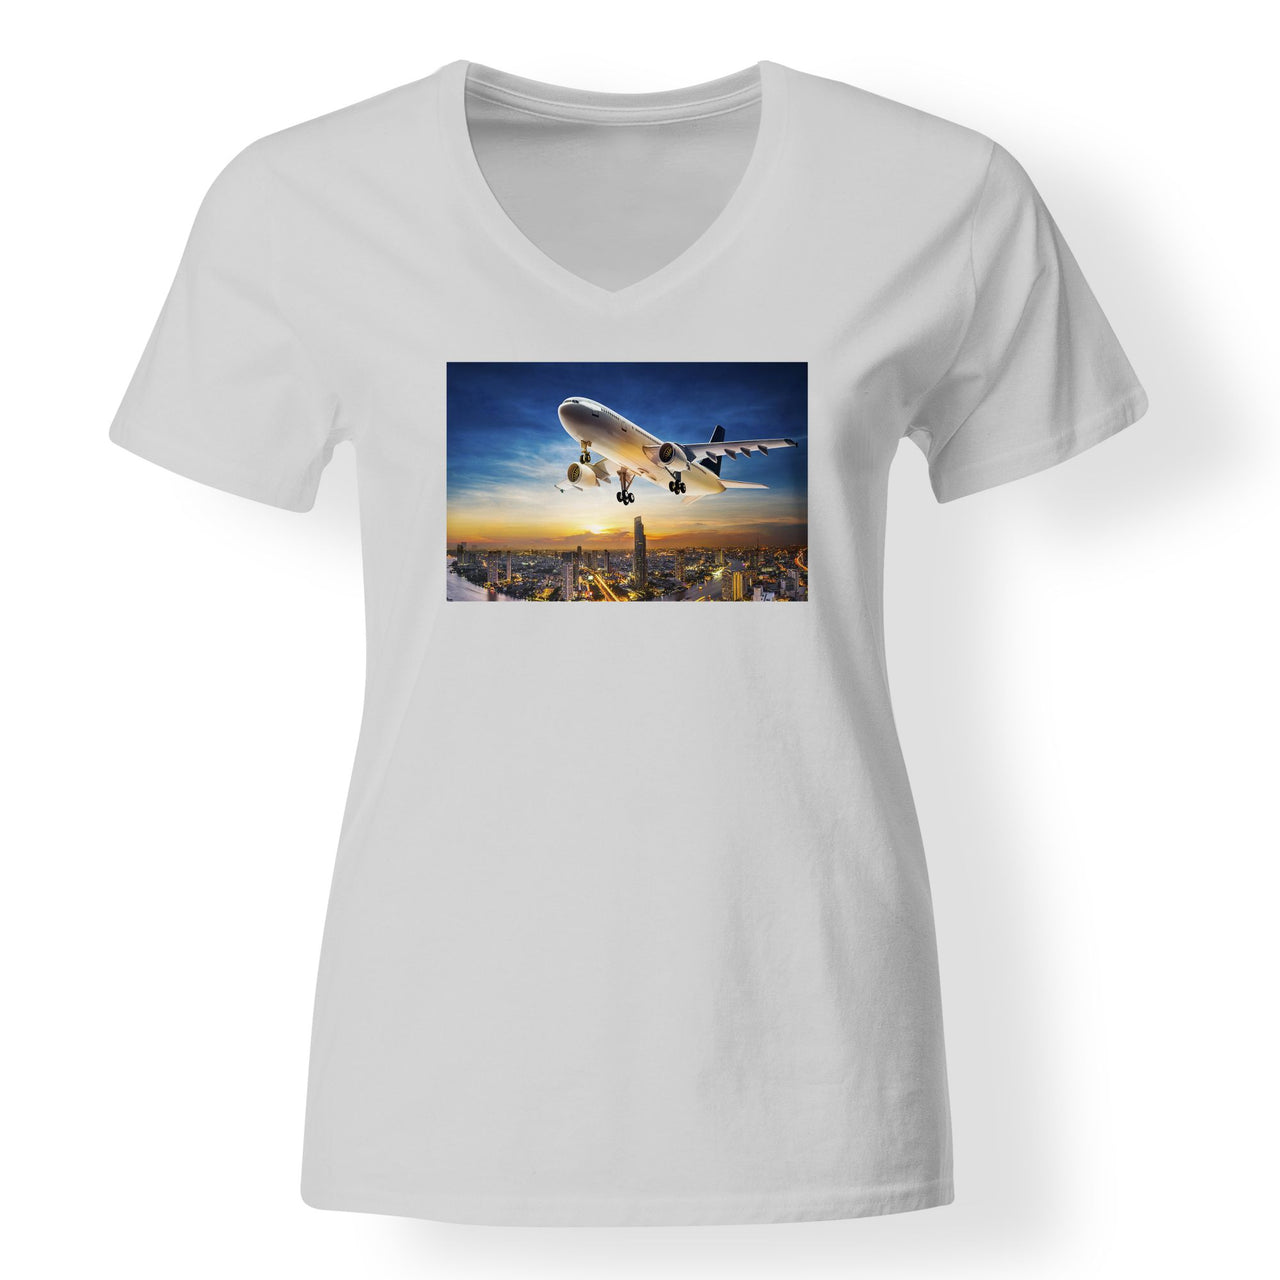 Super Aircraft over City at Sunset Designed V-Neck T-Shirts